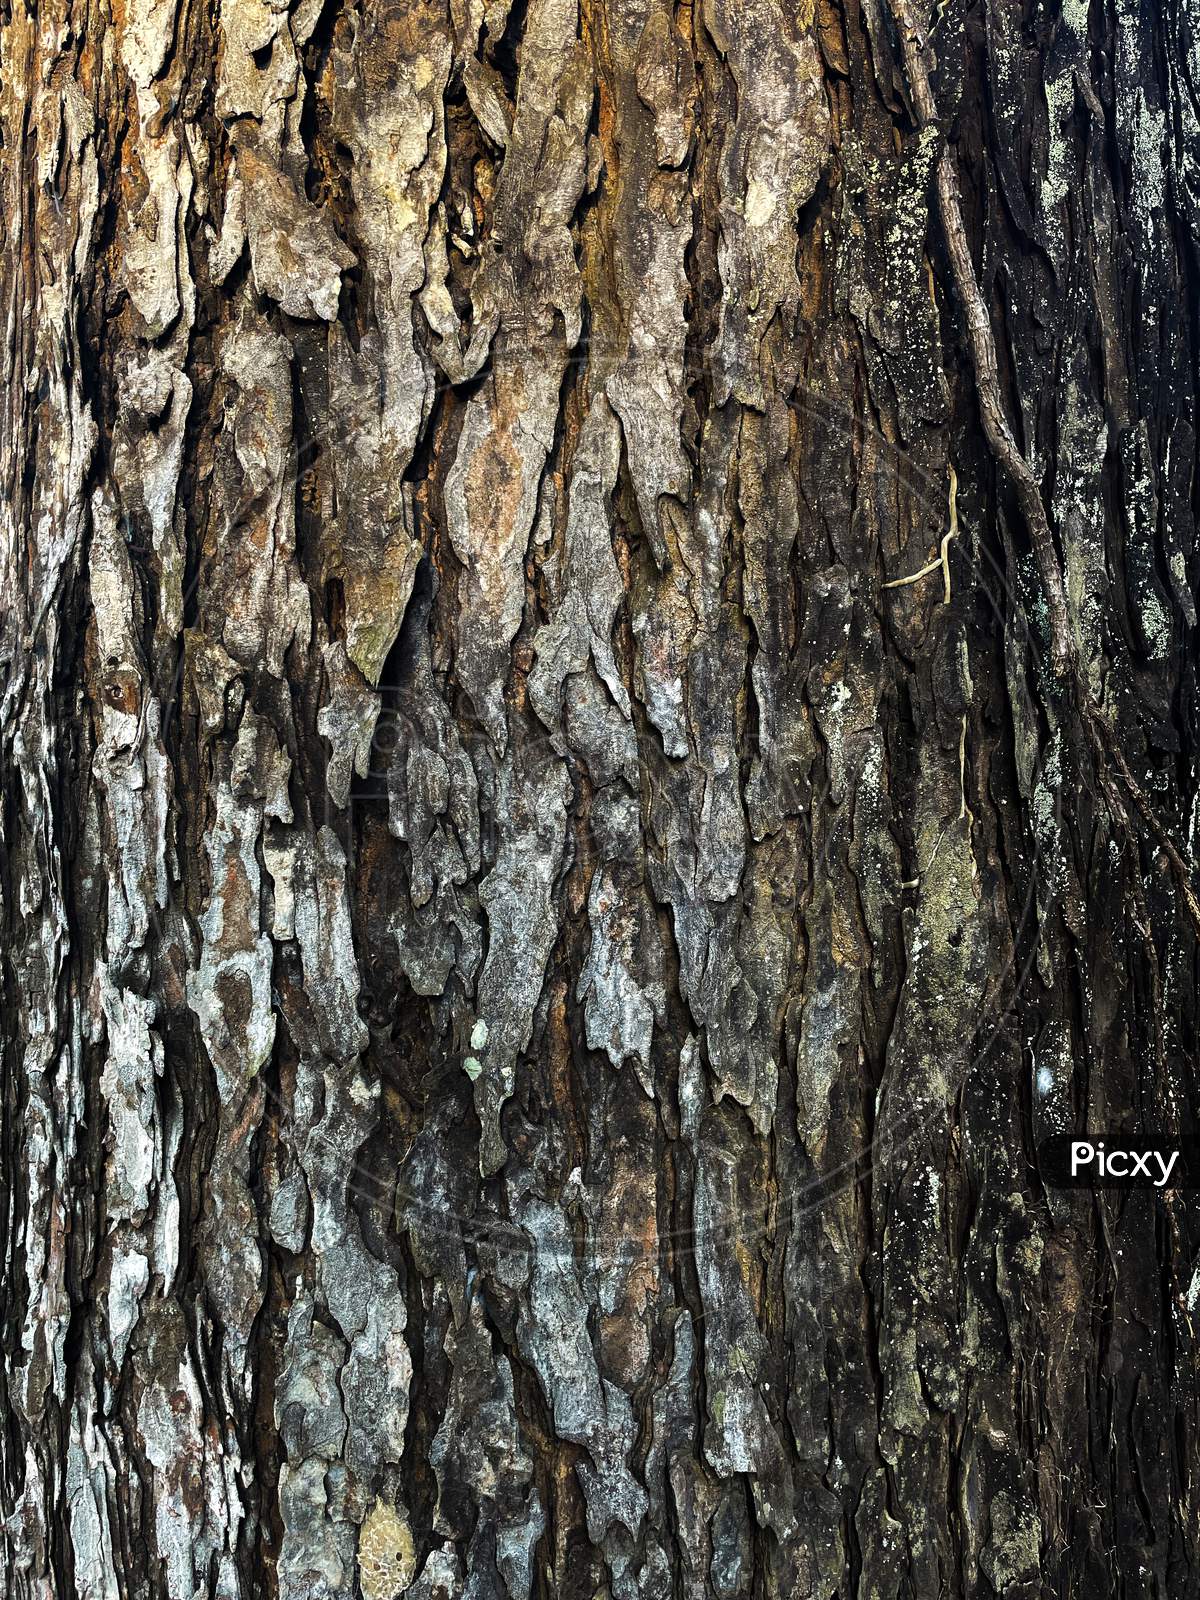 Image Of Bark Texture Of Swietenia Tree.Seamless Texture Of Mahogany Tree